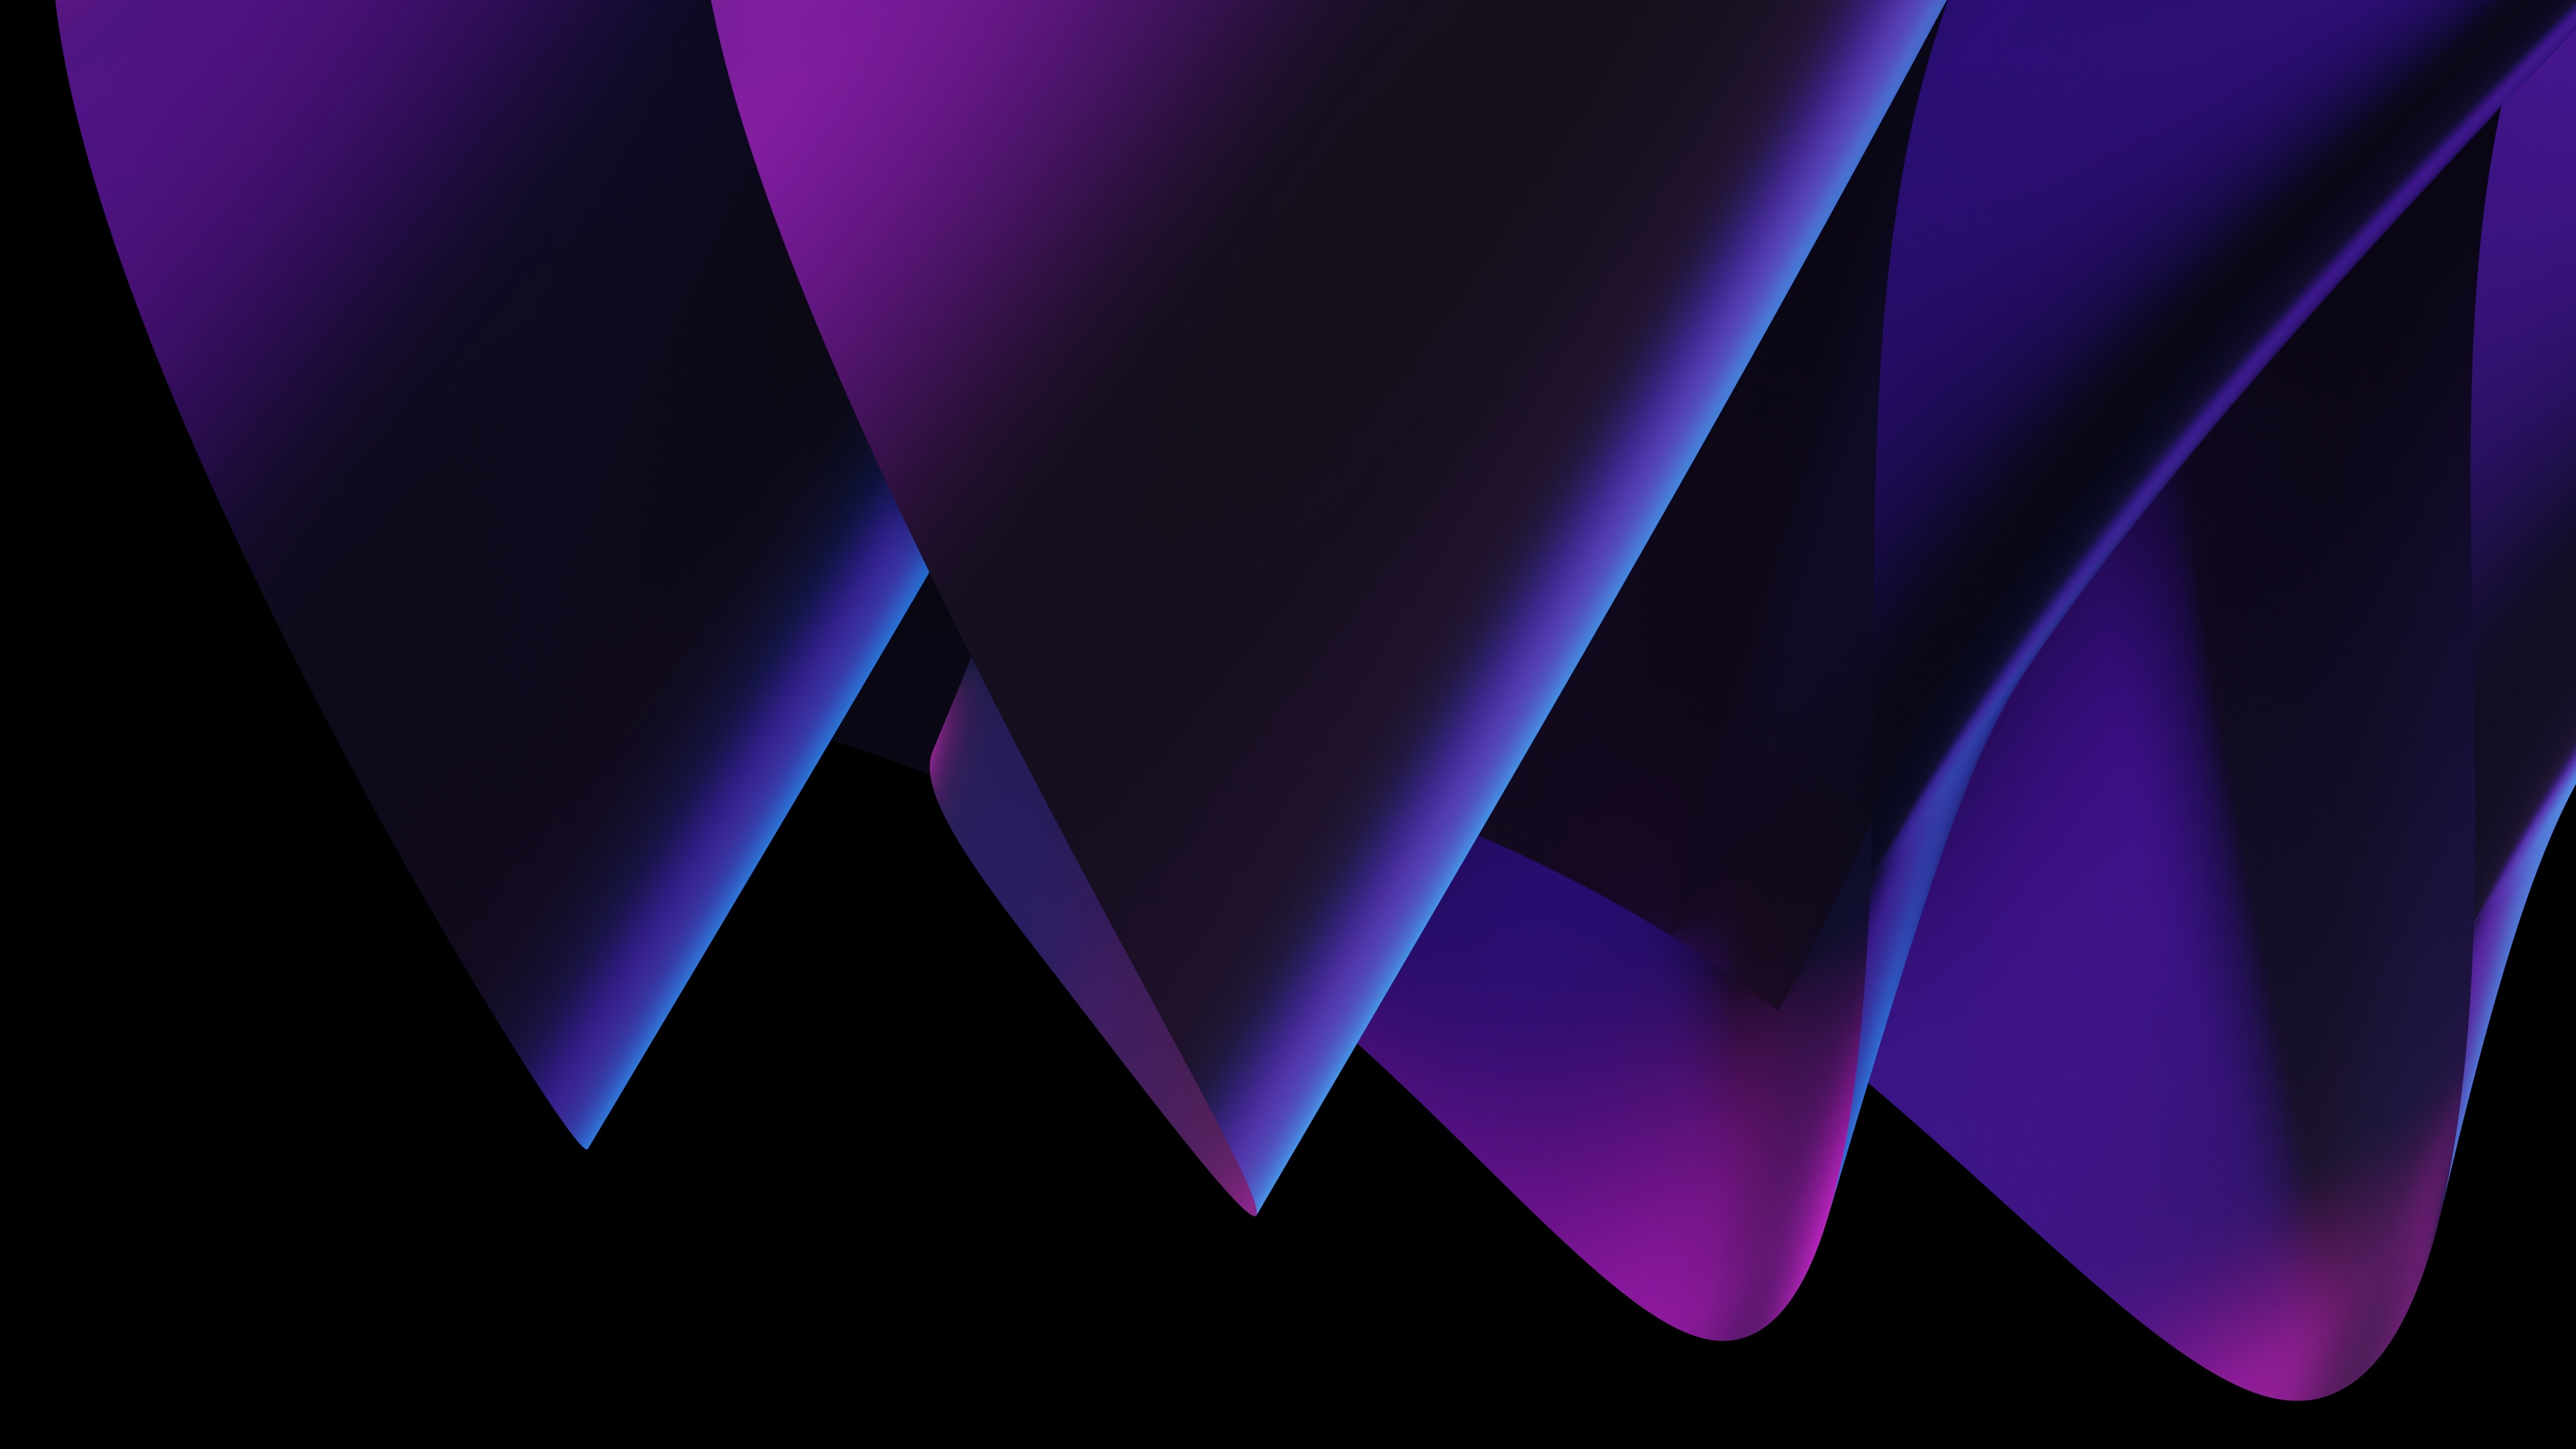 Purple abstract wallpaper Vectors  Illustrations for Free Download   Freepik